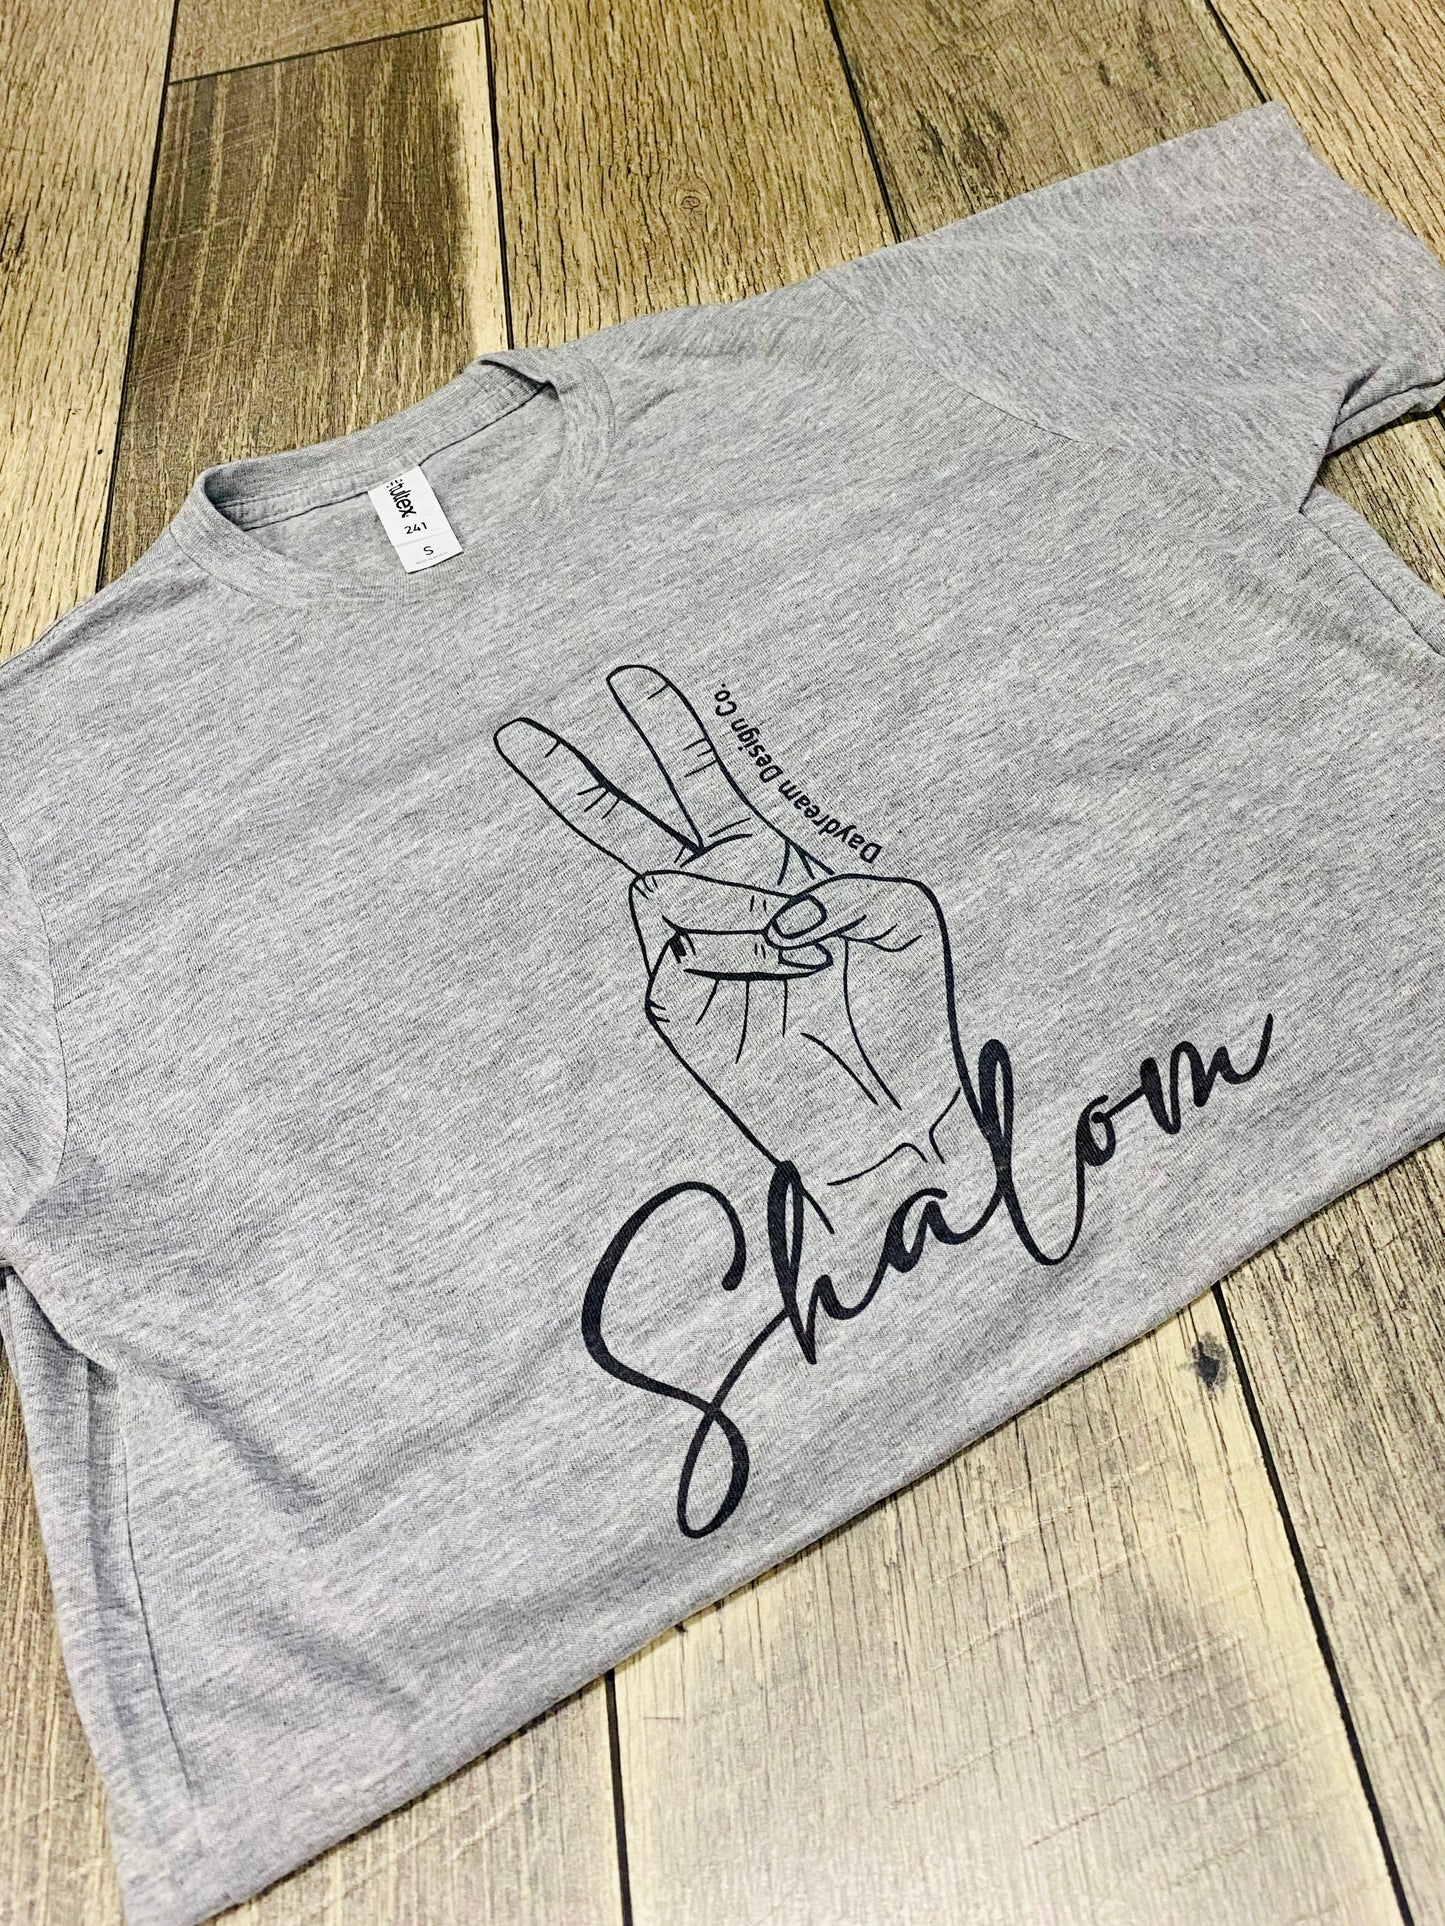 Shalom T-Shirt in Heather Grey by Daydream Design Co.